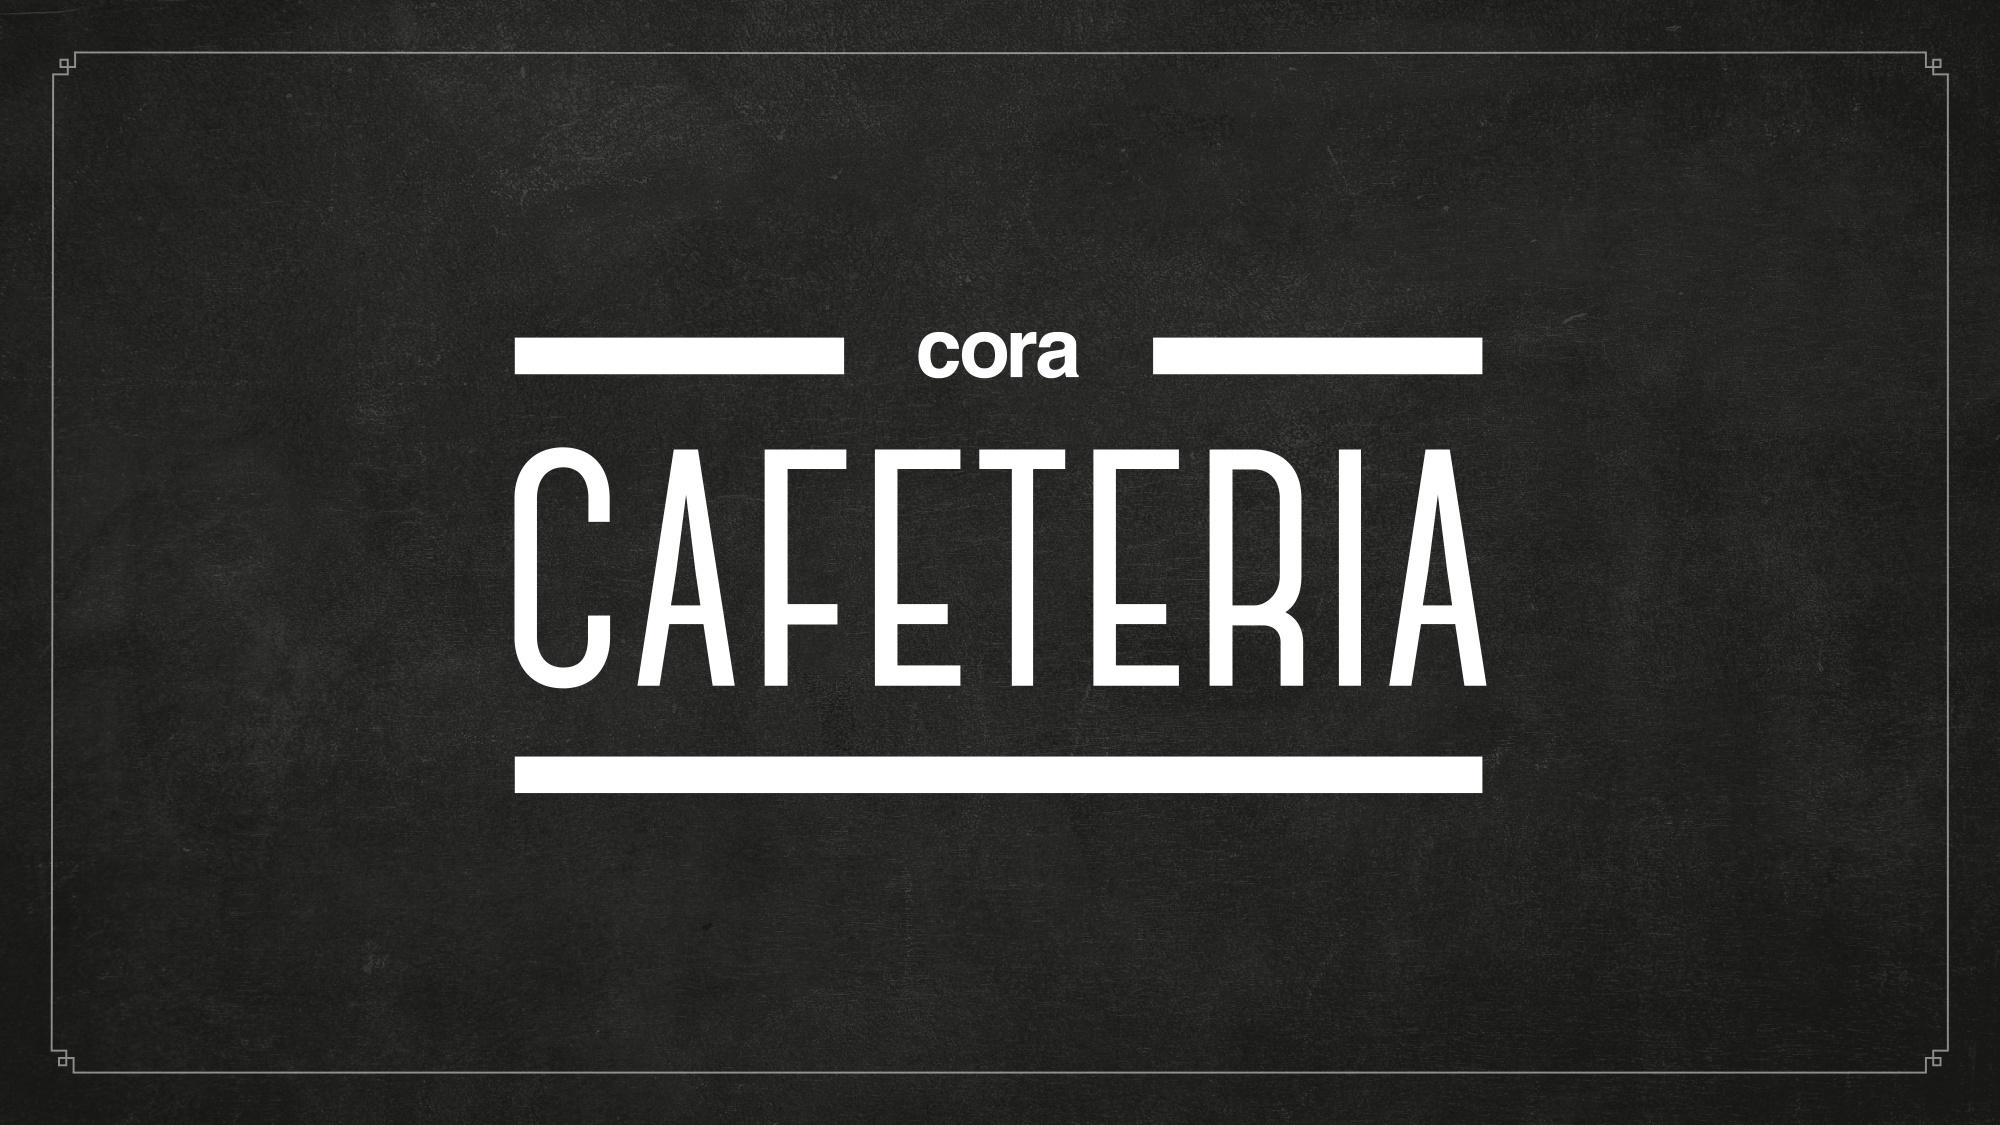 Cora Cafeteria Sarrebourg